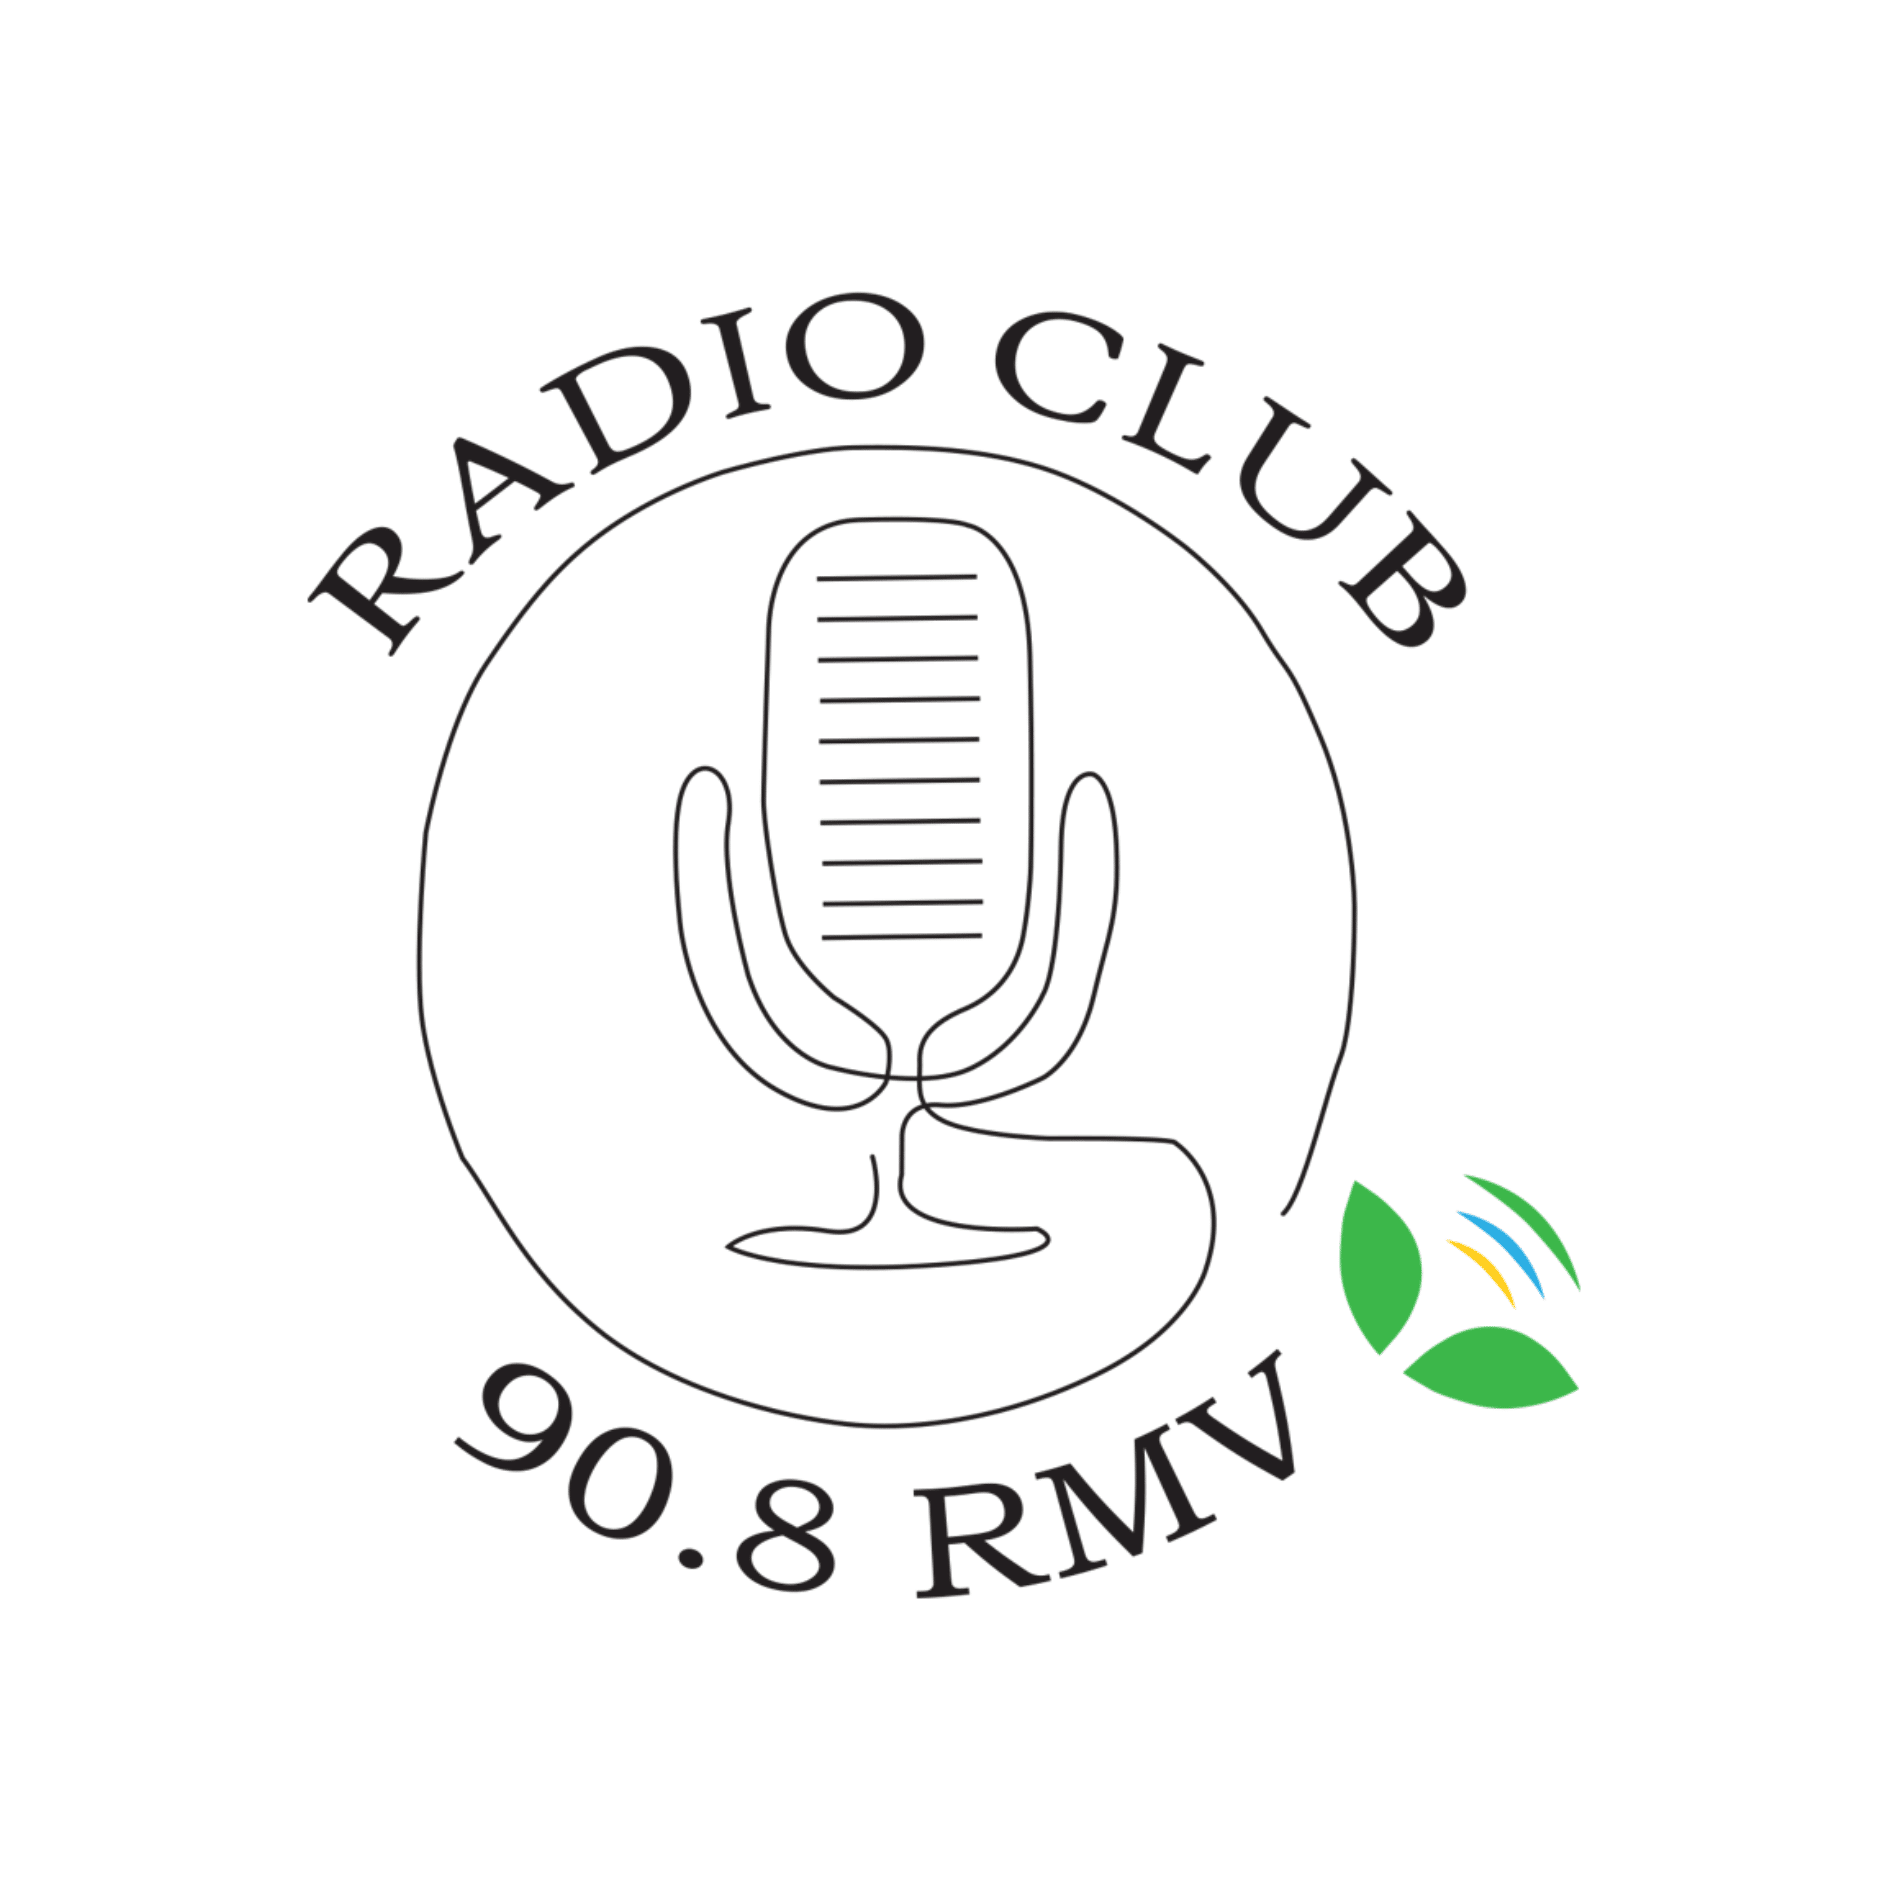 Radio Club Logo